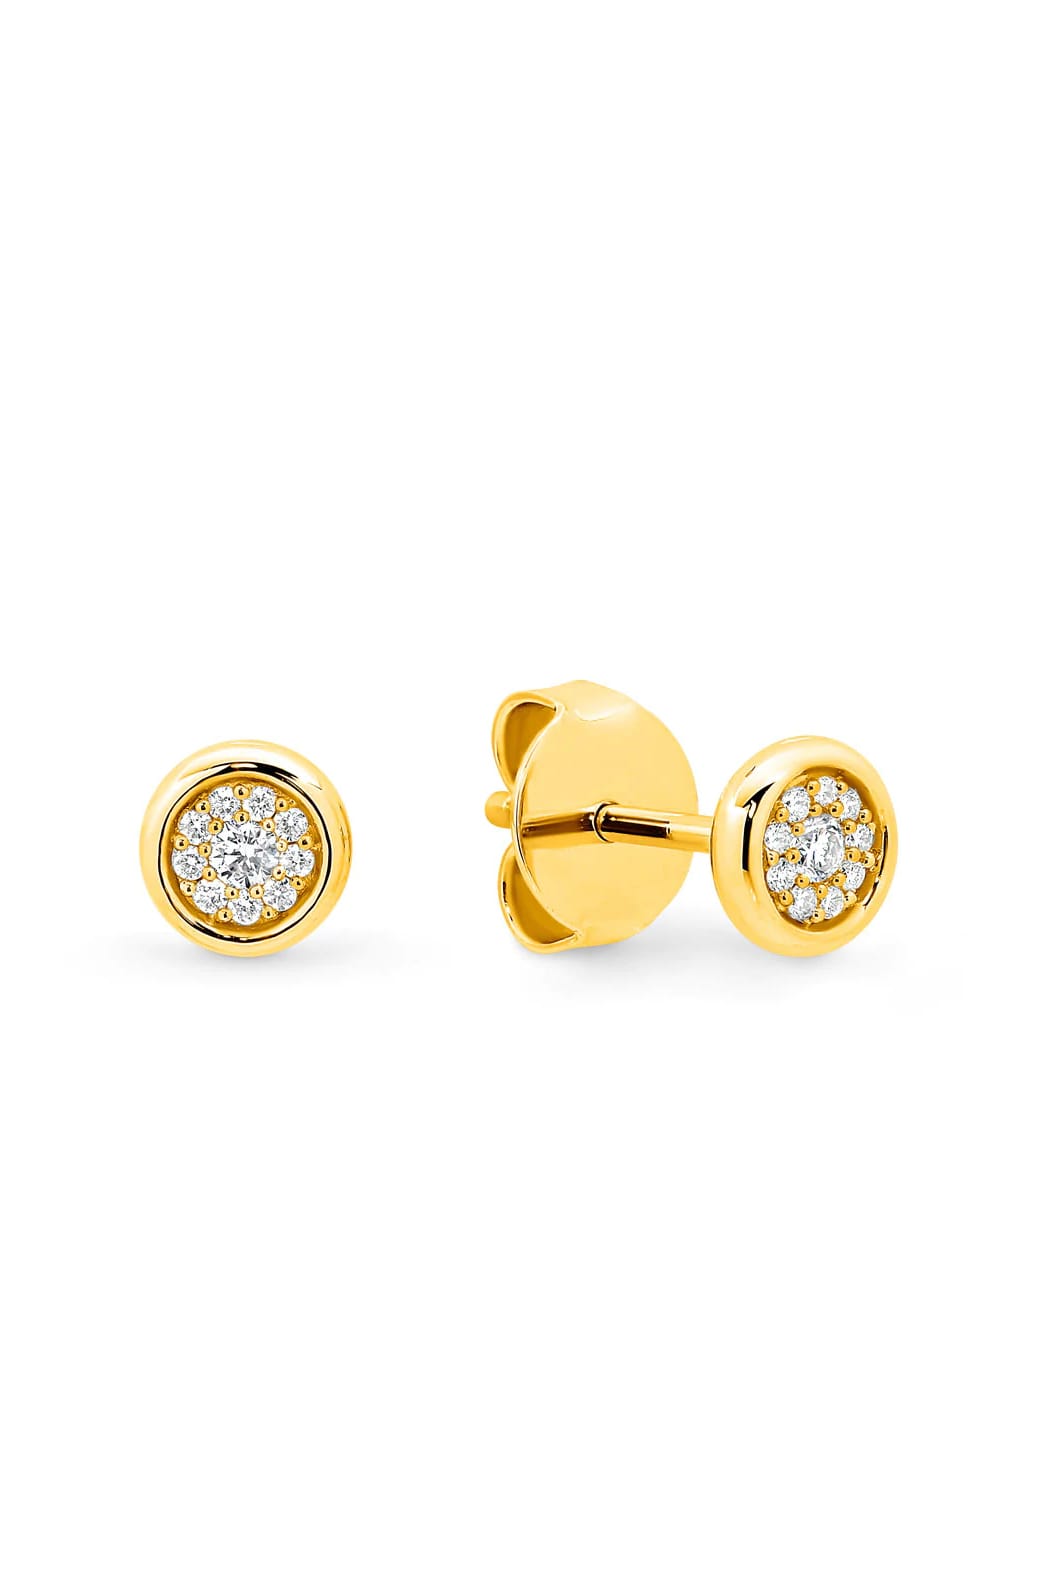 9 Carat Yellow Gold Circle Pave Diamond Stud Earrings LeGassick available at LeGassick Diamonds and Jewellery Gold Coast, Australia.